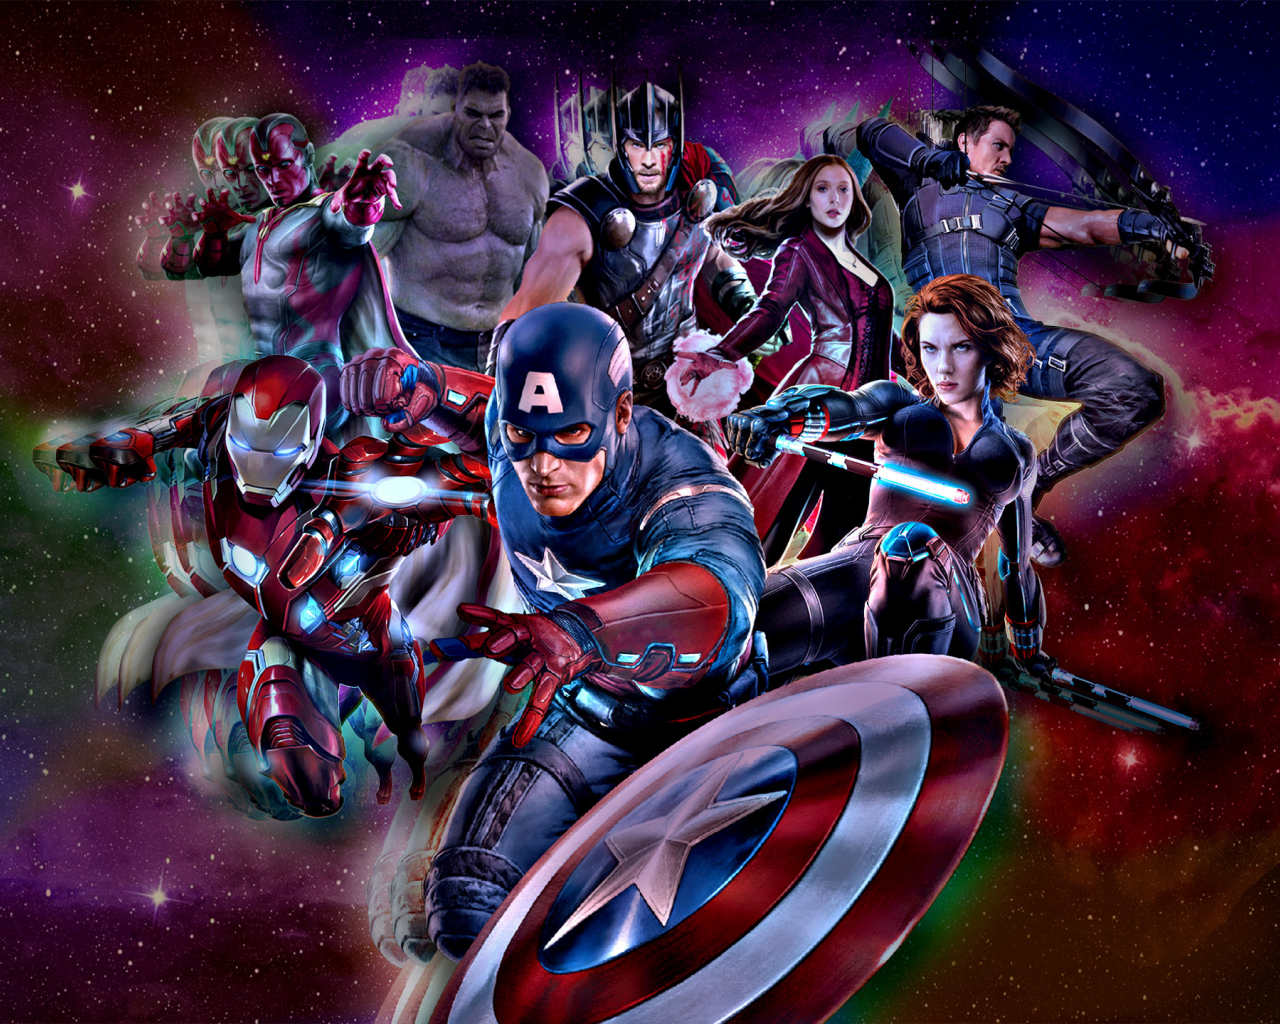 Download wallpaper 1280x1024 the avengers, marvel comics, superhero,  standard 5:4 fullscreen wallpaper, 1280x1024 hd background, 7652